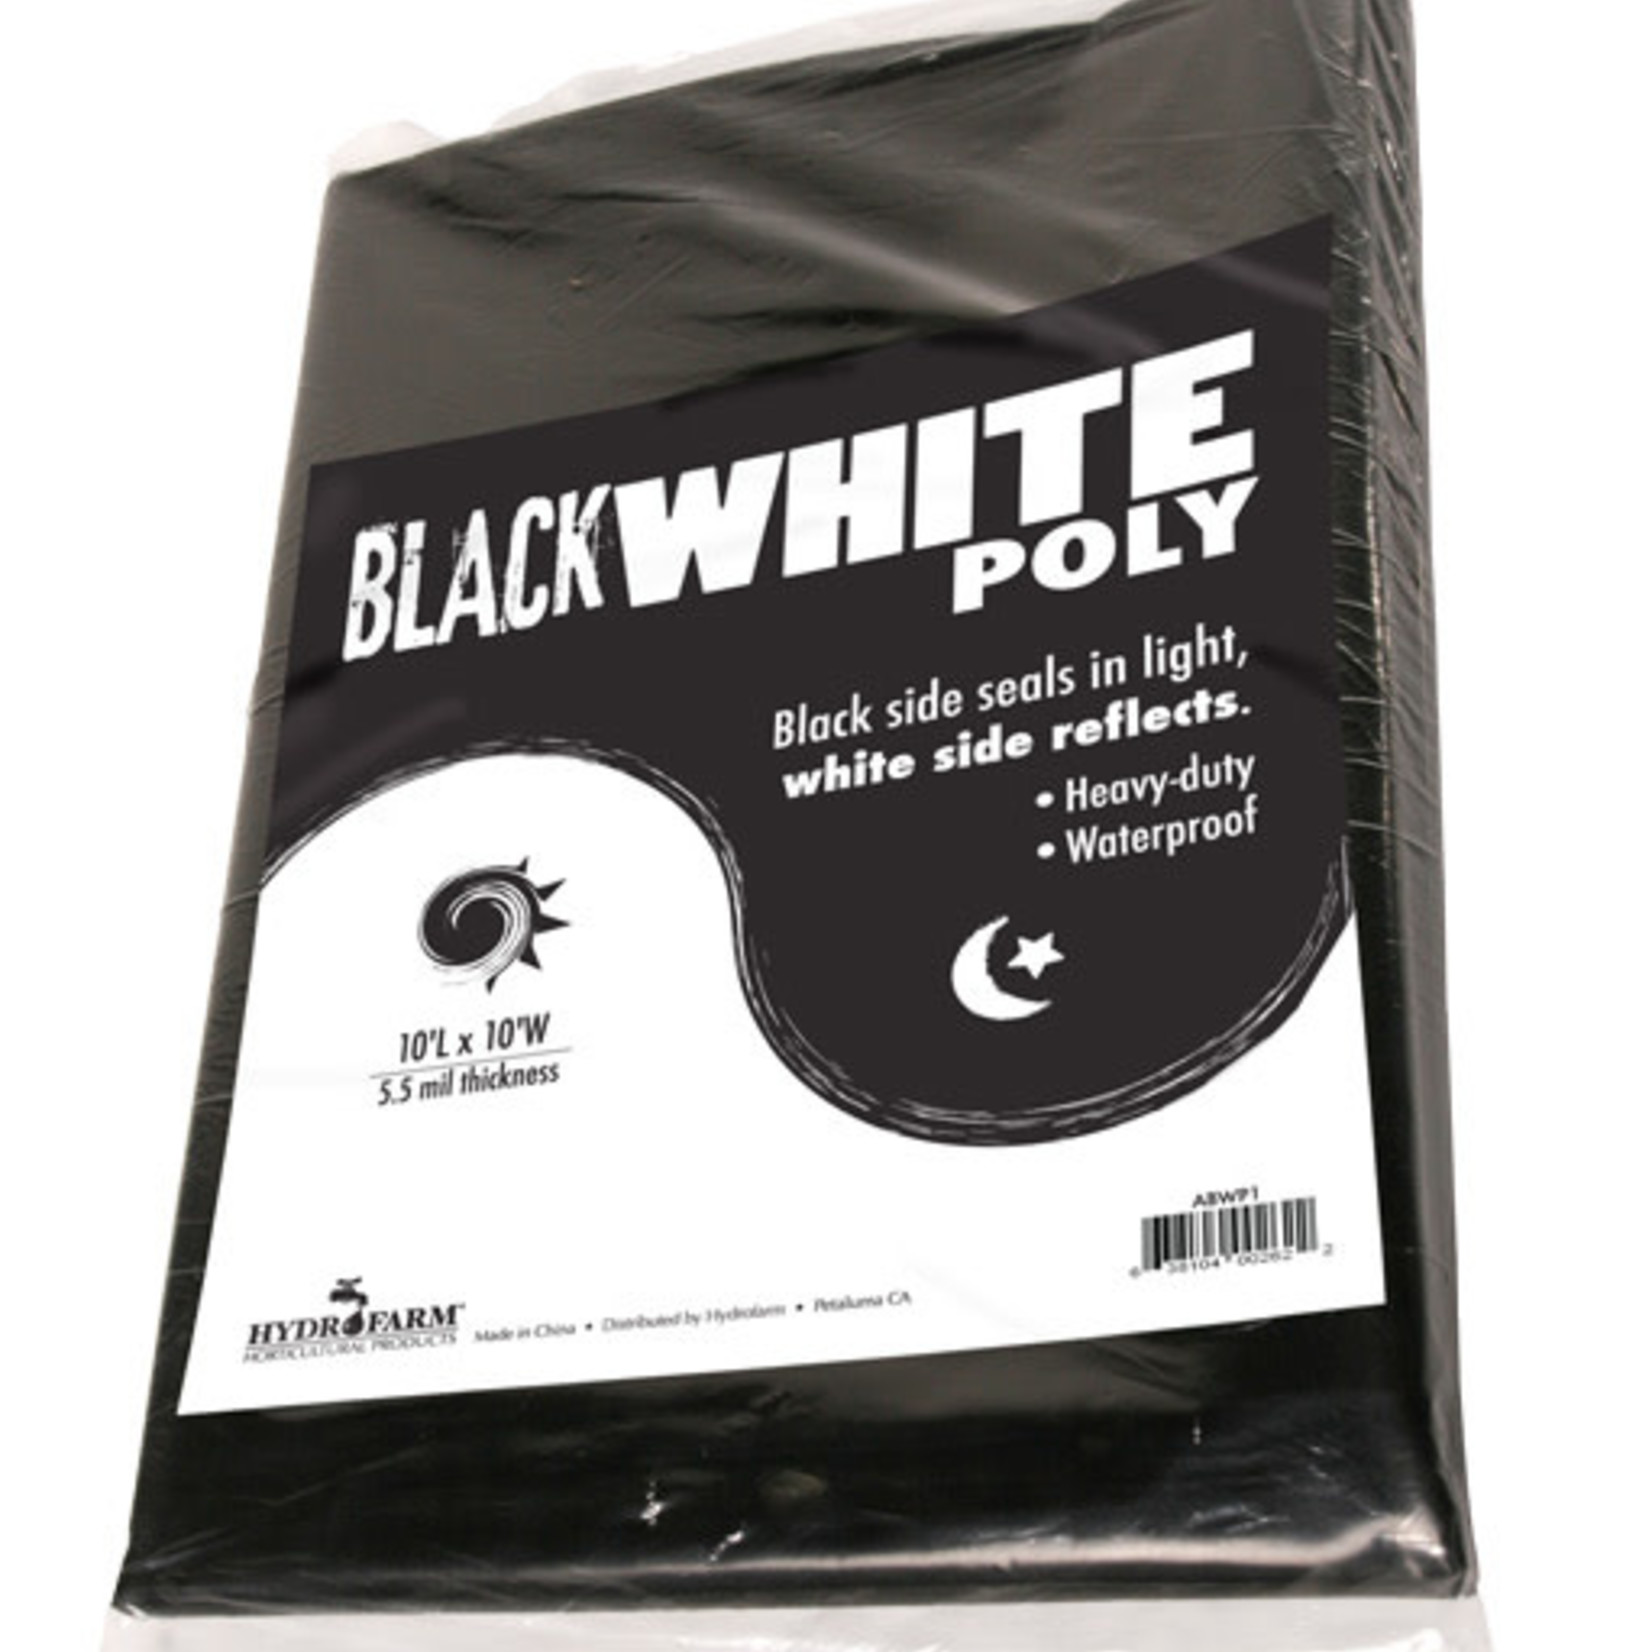 HydroFarm Black White Poly, 10' x 25', 5.5 mil